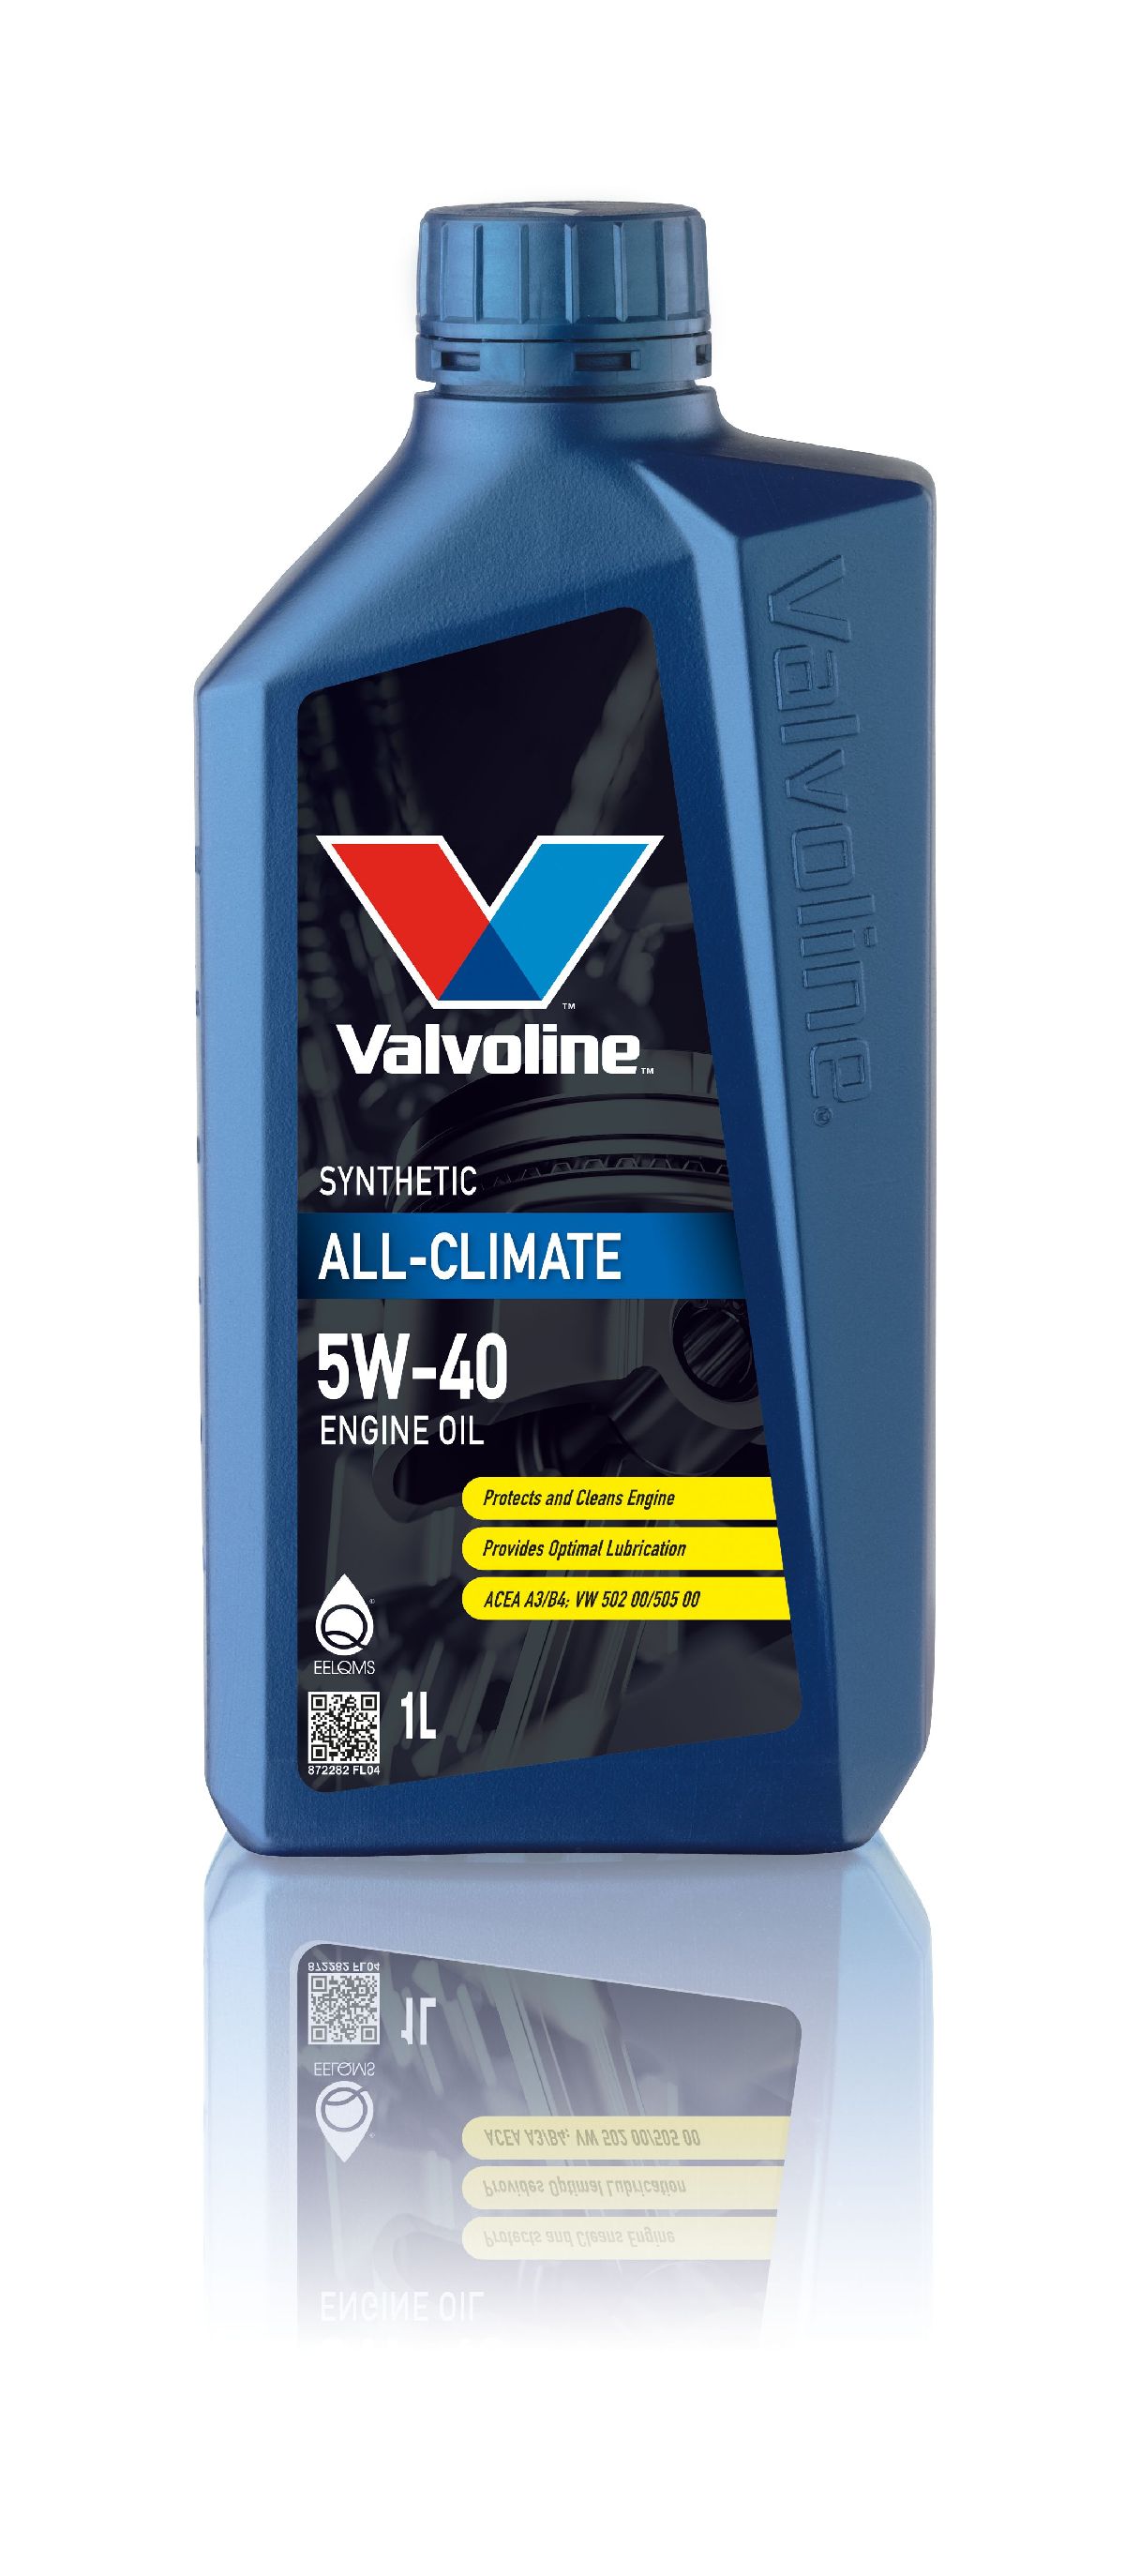 Valvoline All-Climate 5W-40